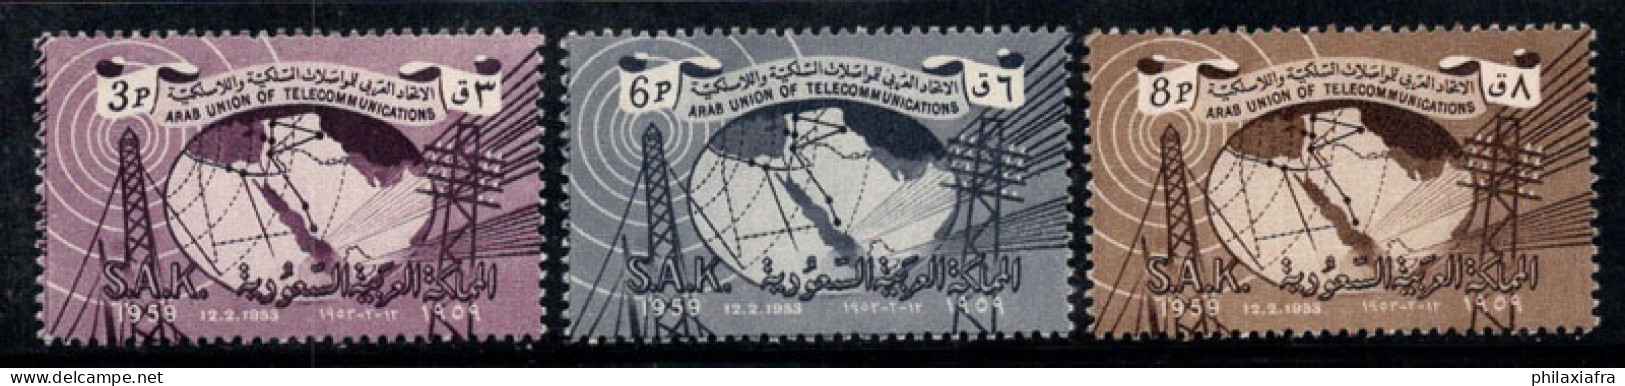 Arabie Saoudite 1961 Mi. 118-20 Neuf ** 100% Poteaux Radio Et Télégraphiques - Saudi Arabia